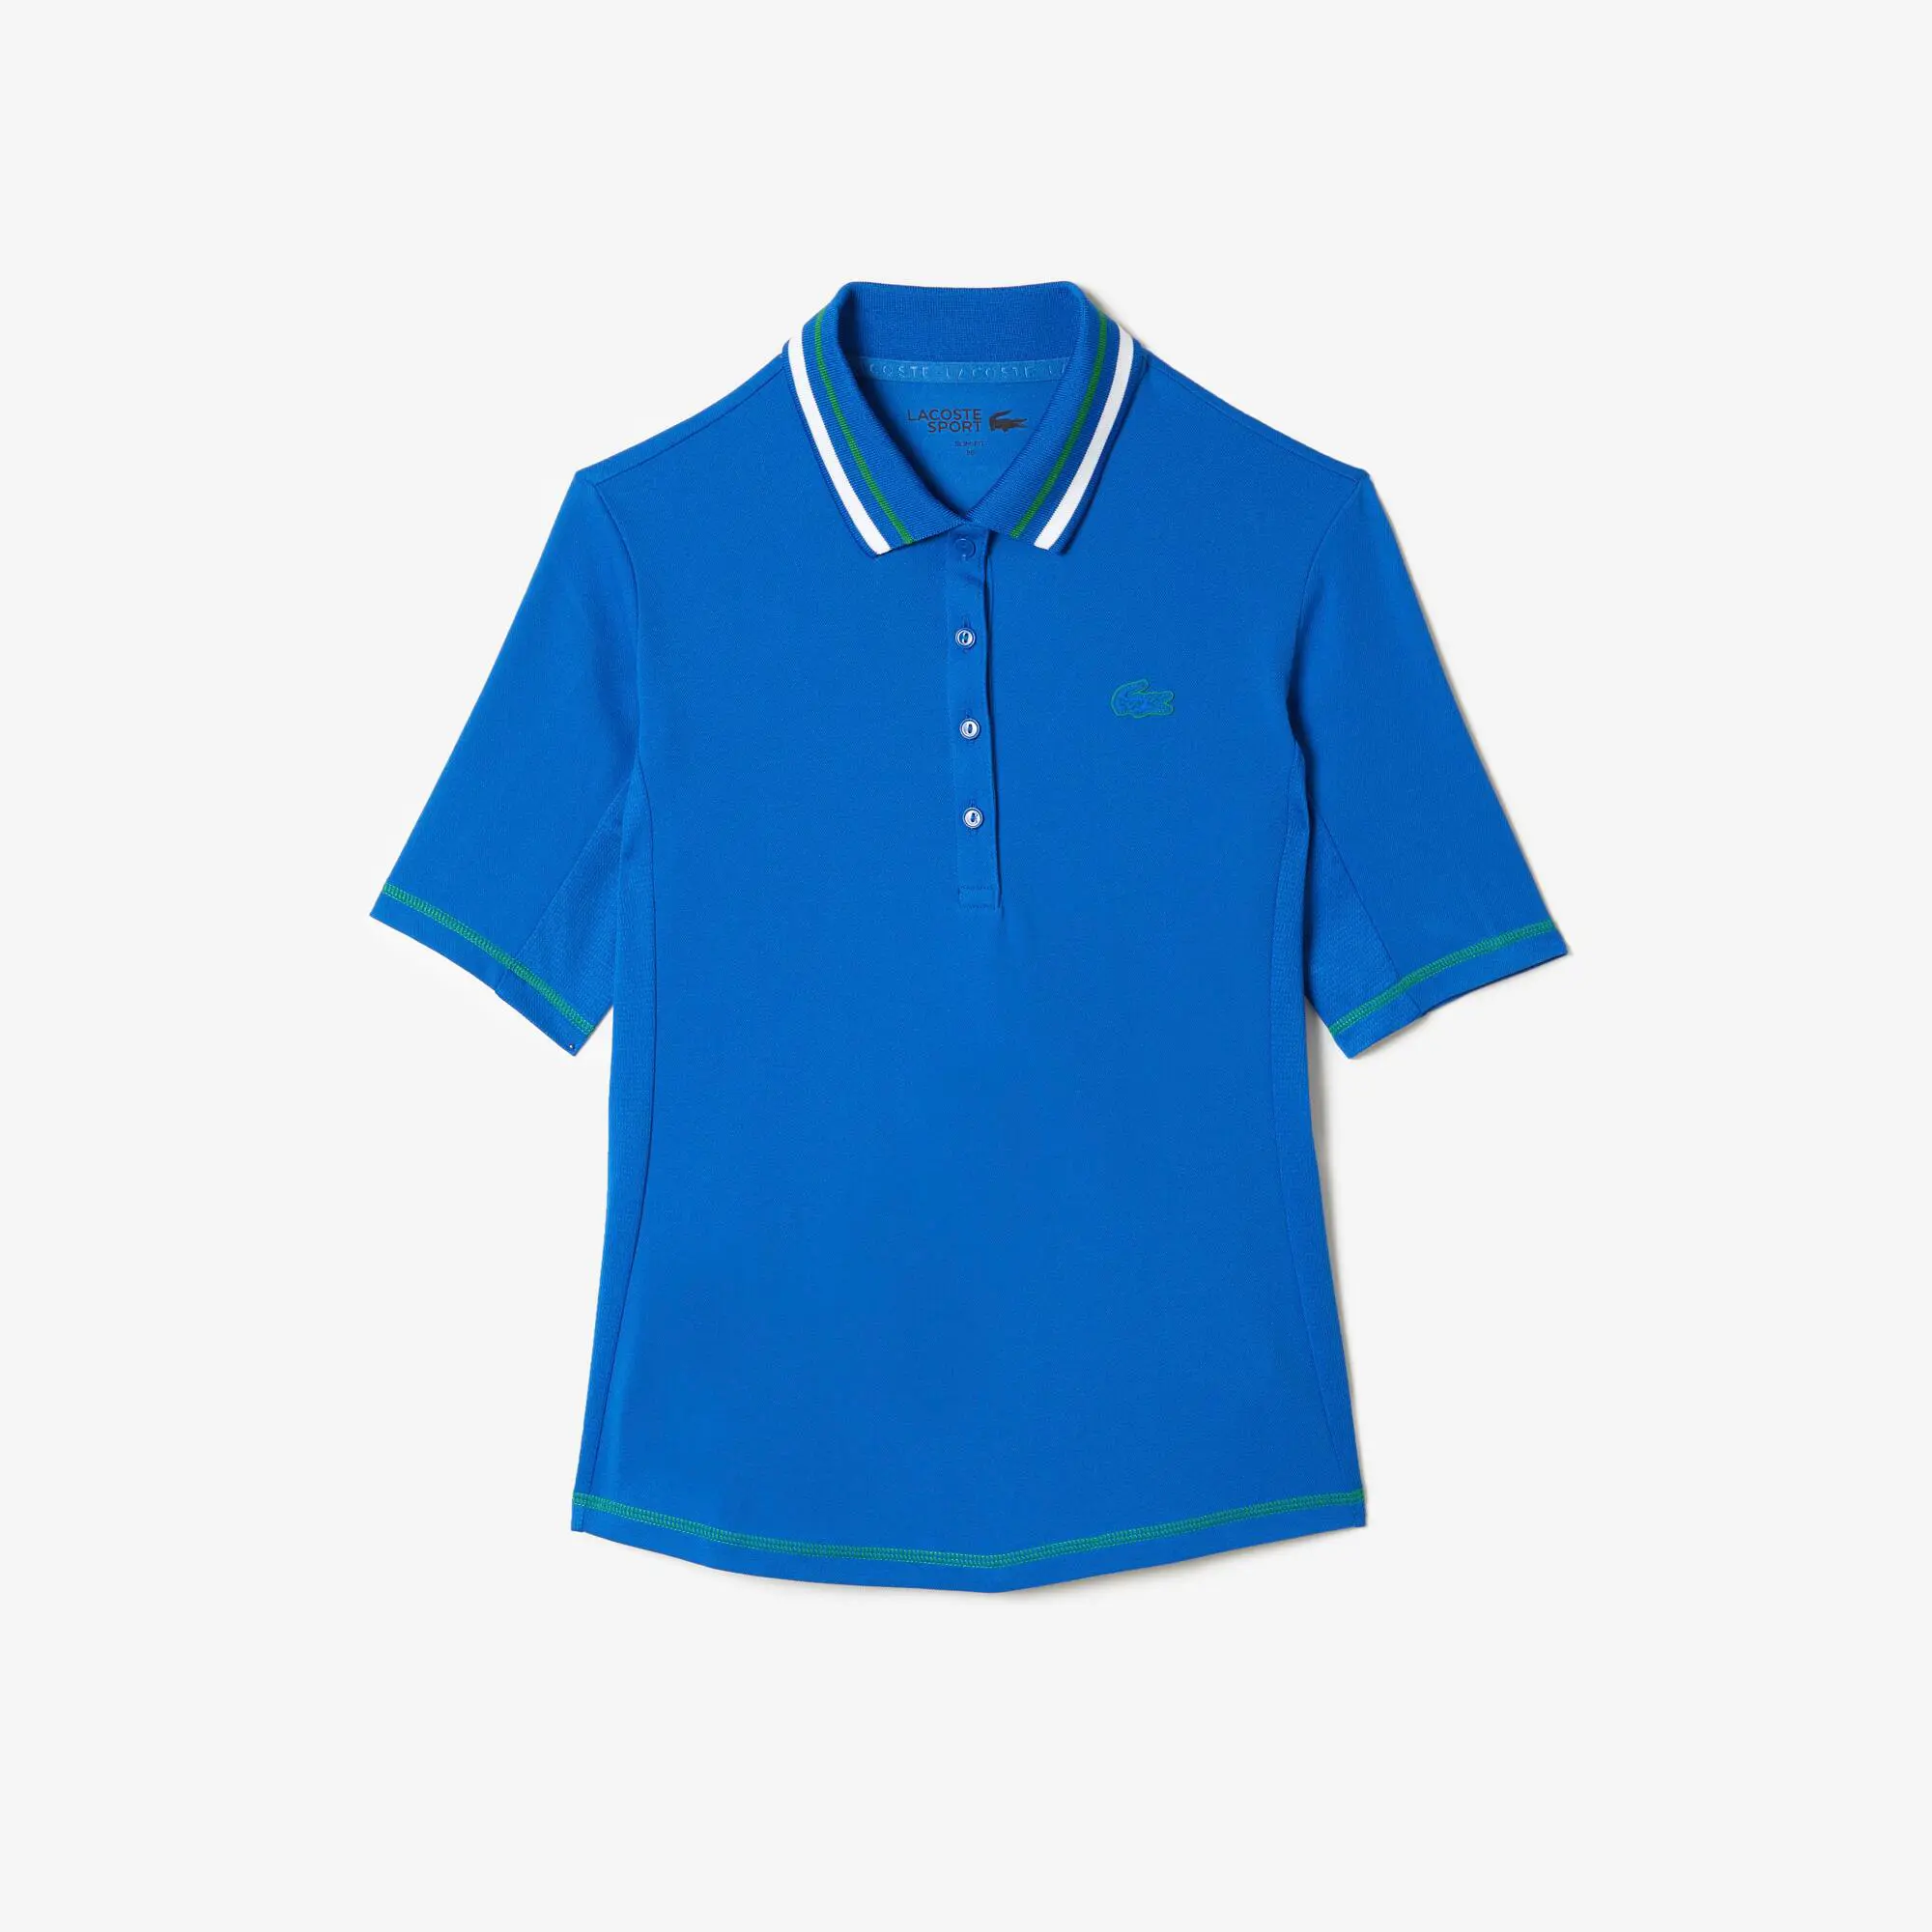 Lacoste Women’s Lacoste Tennis Ultra-dry Pique Polo Shirt. 2